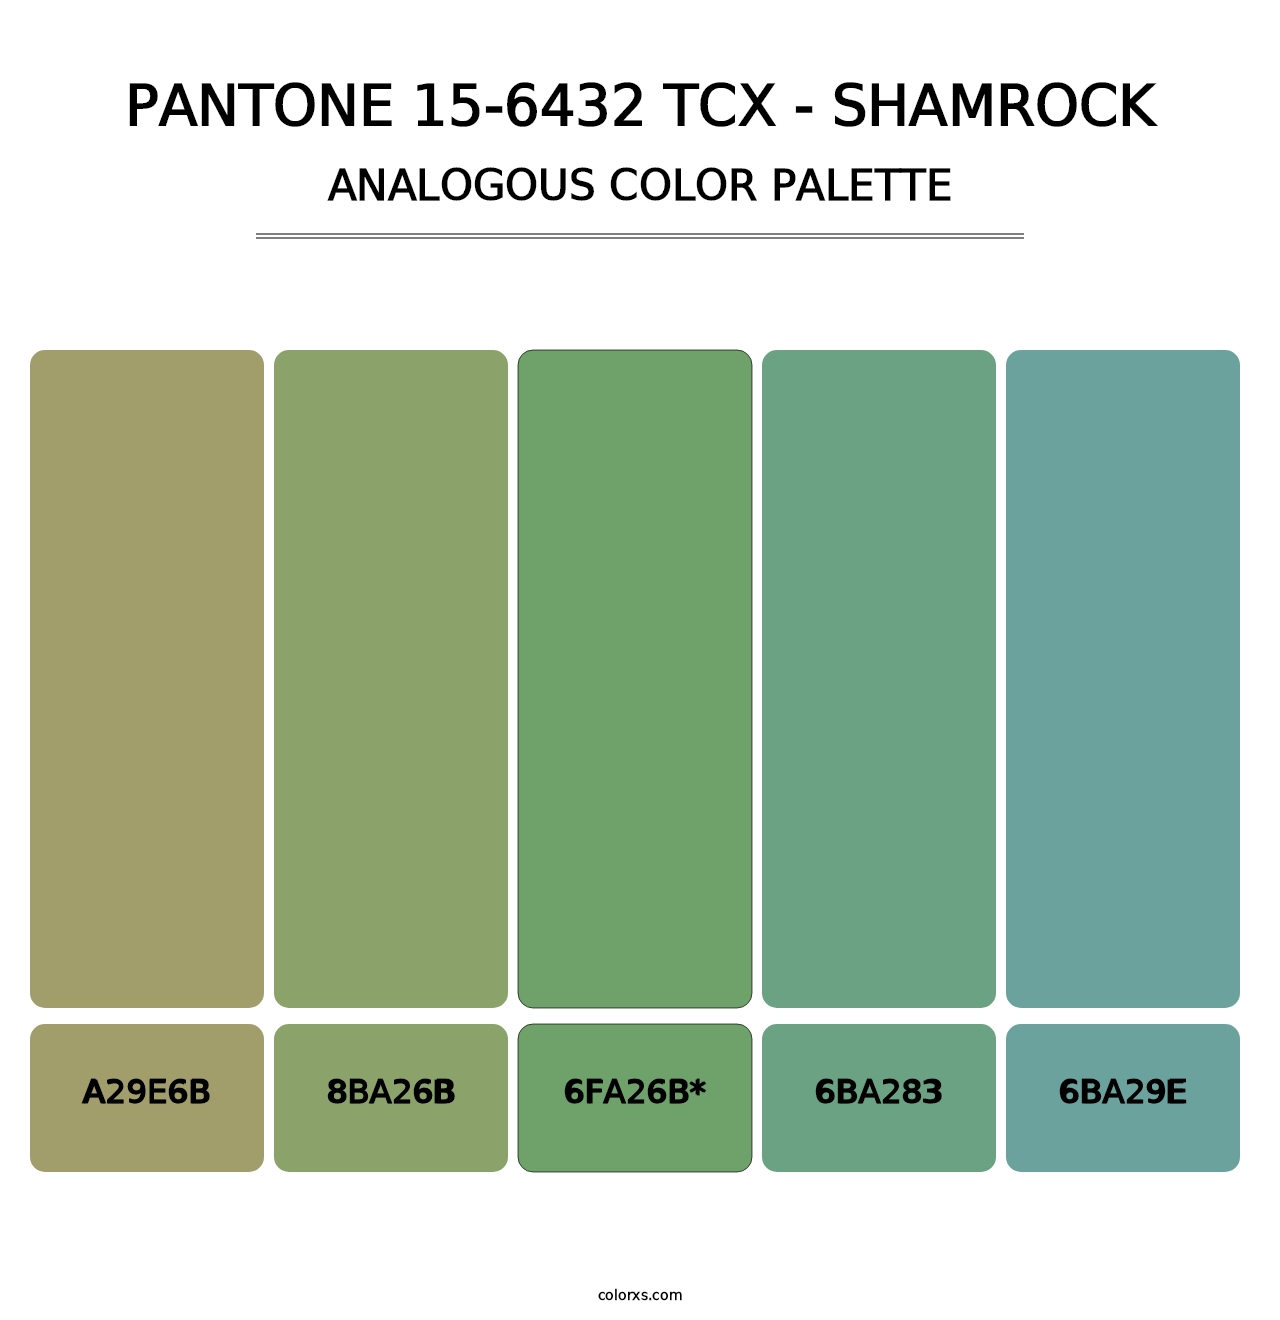 PANTONE 15-6432 TCX - Shamrock - Analogous Color Palette